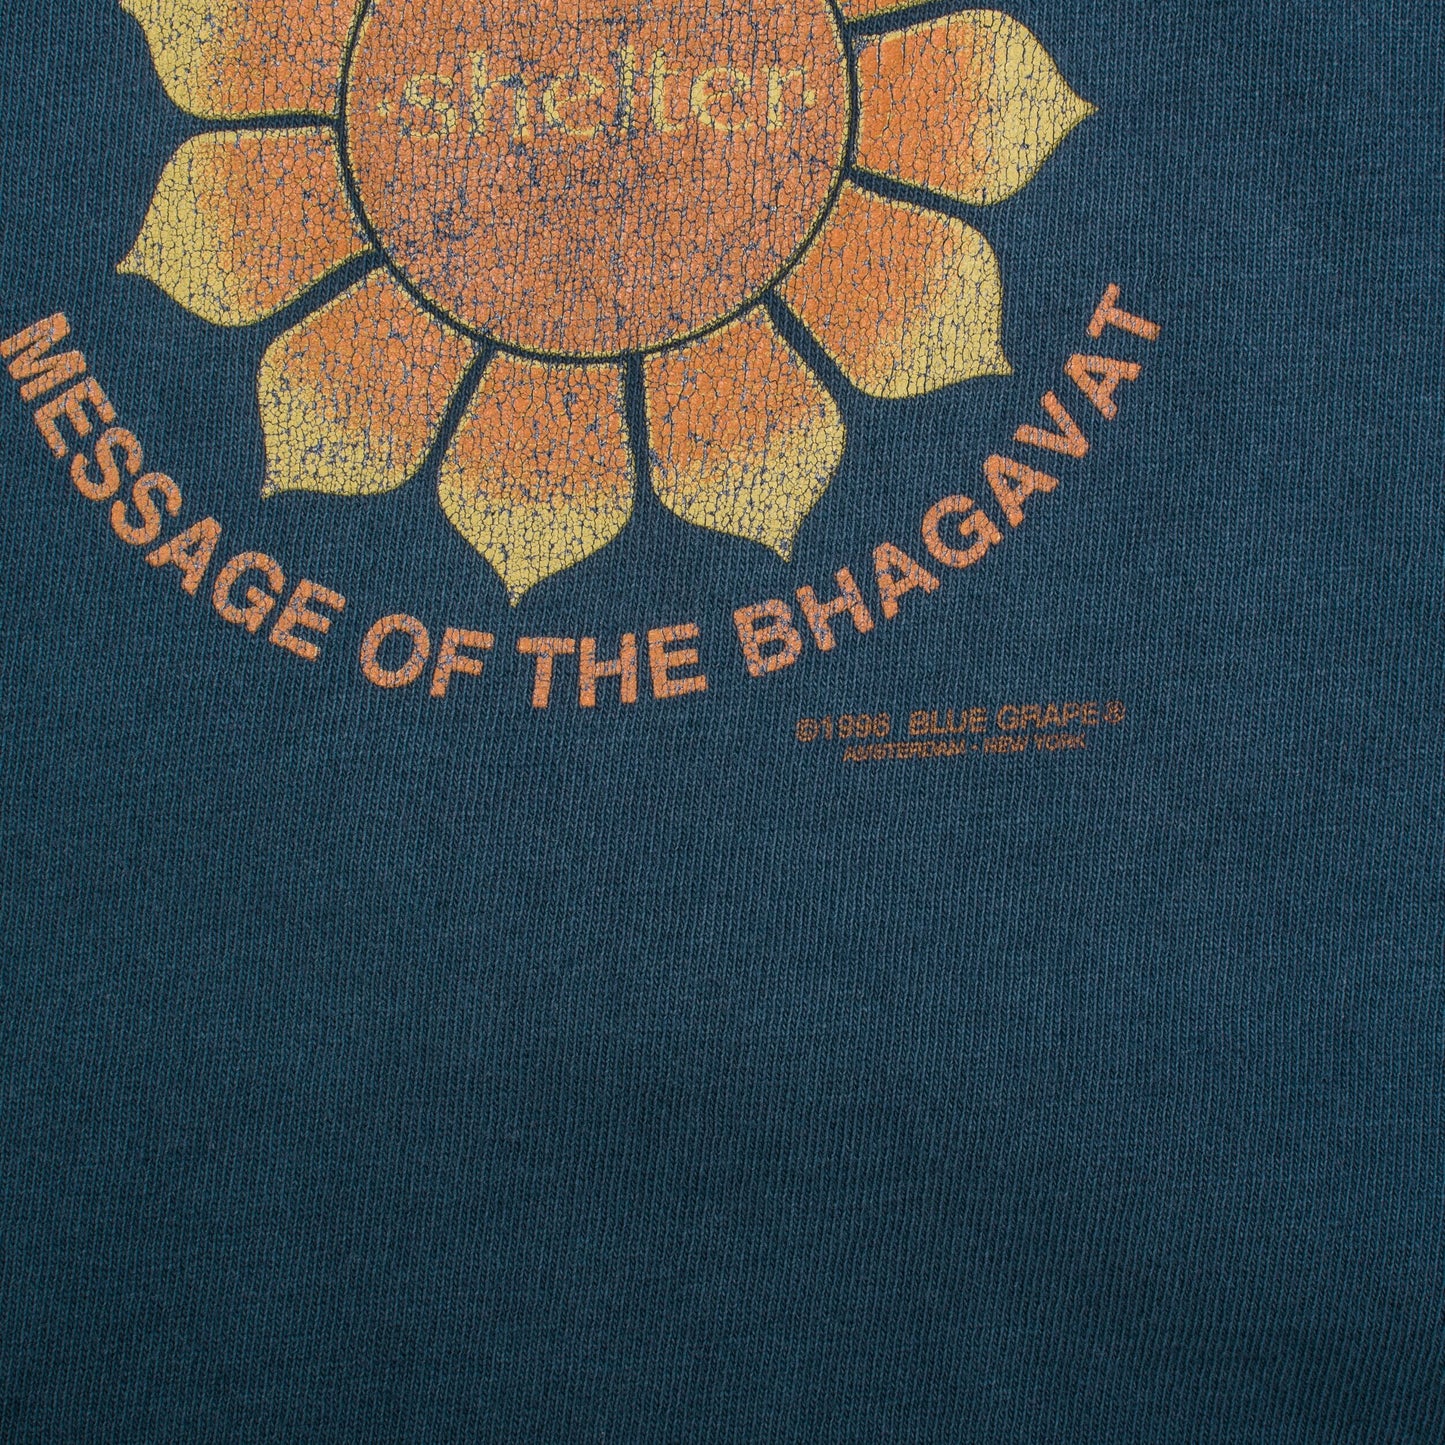 Vintage 1996 Shelter Message Of The Bhagavat T-Shirt